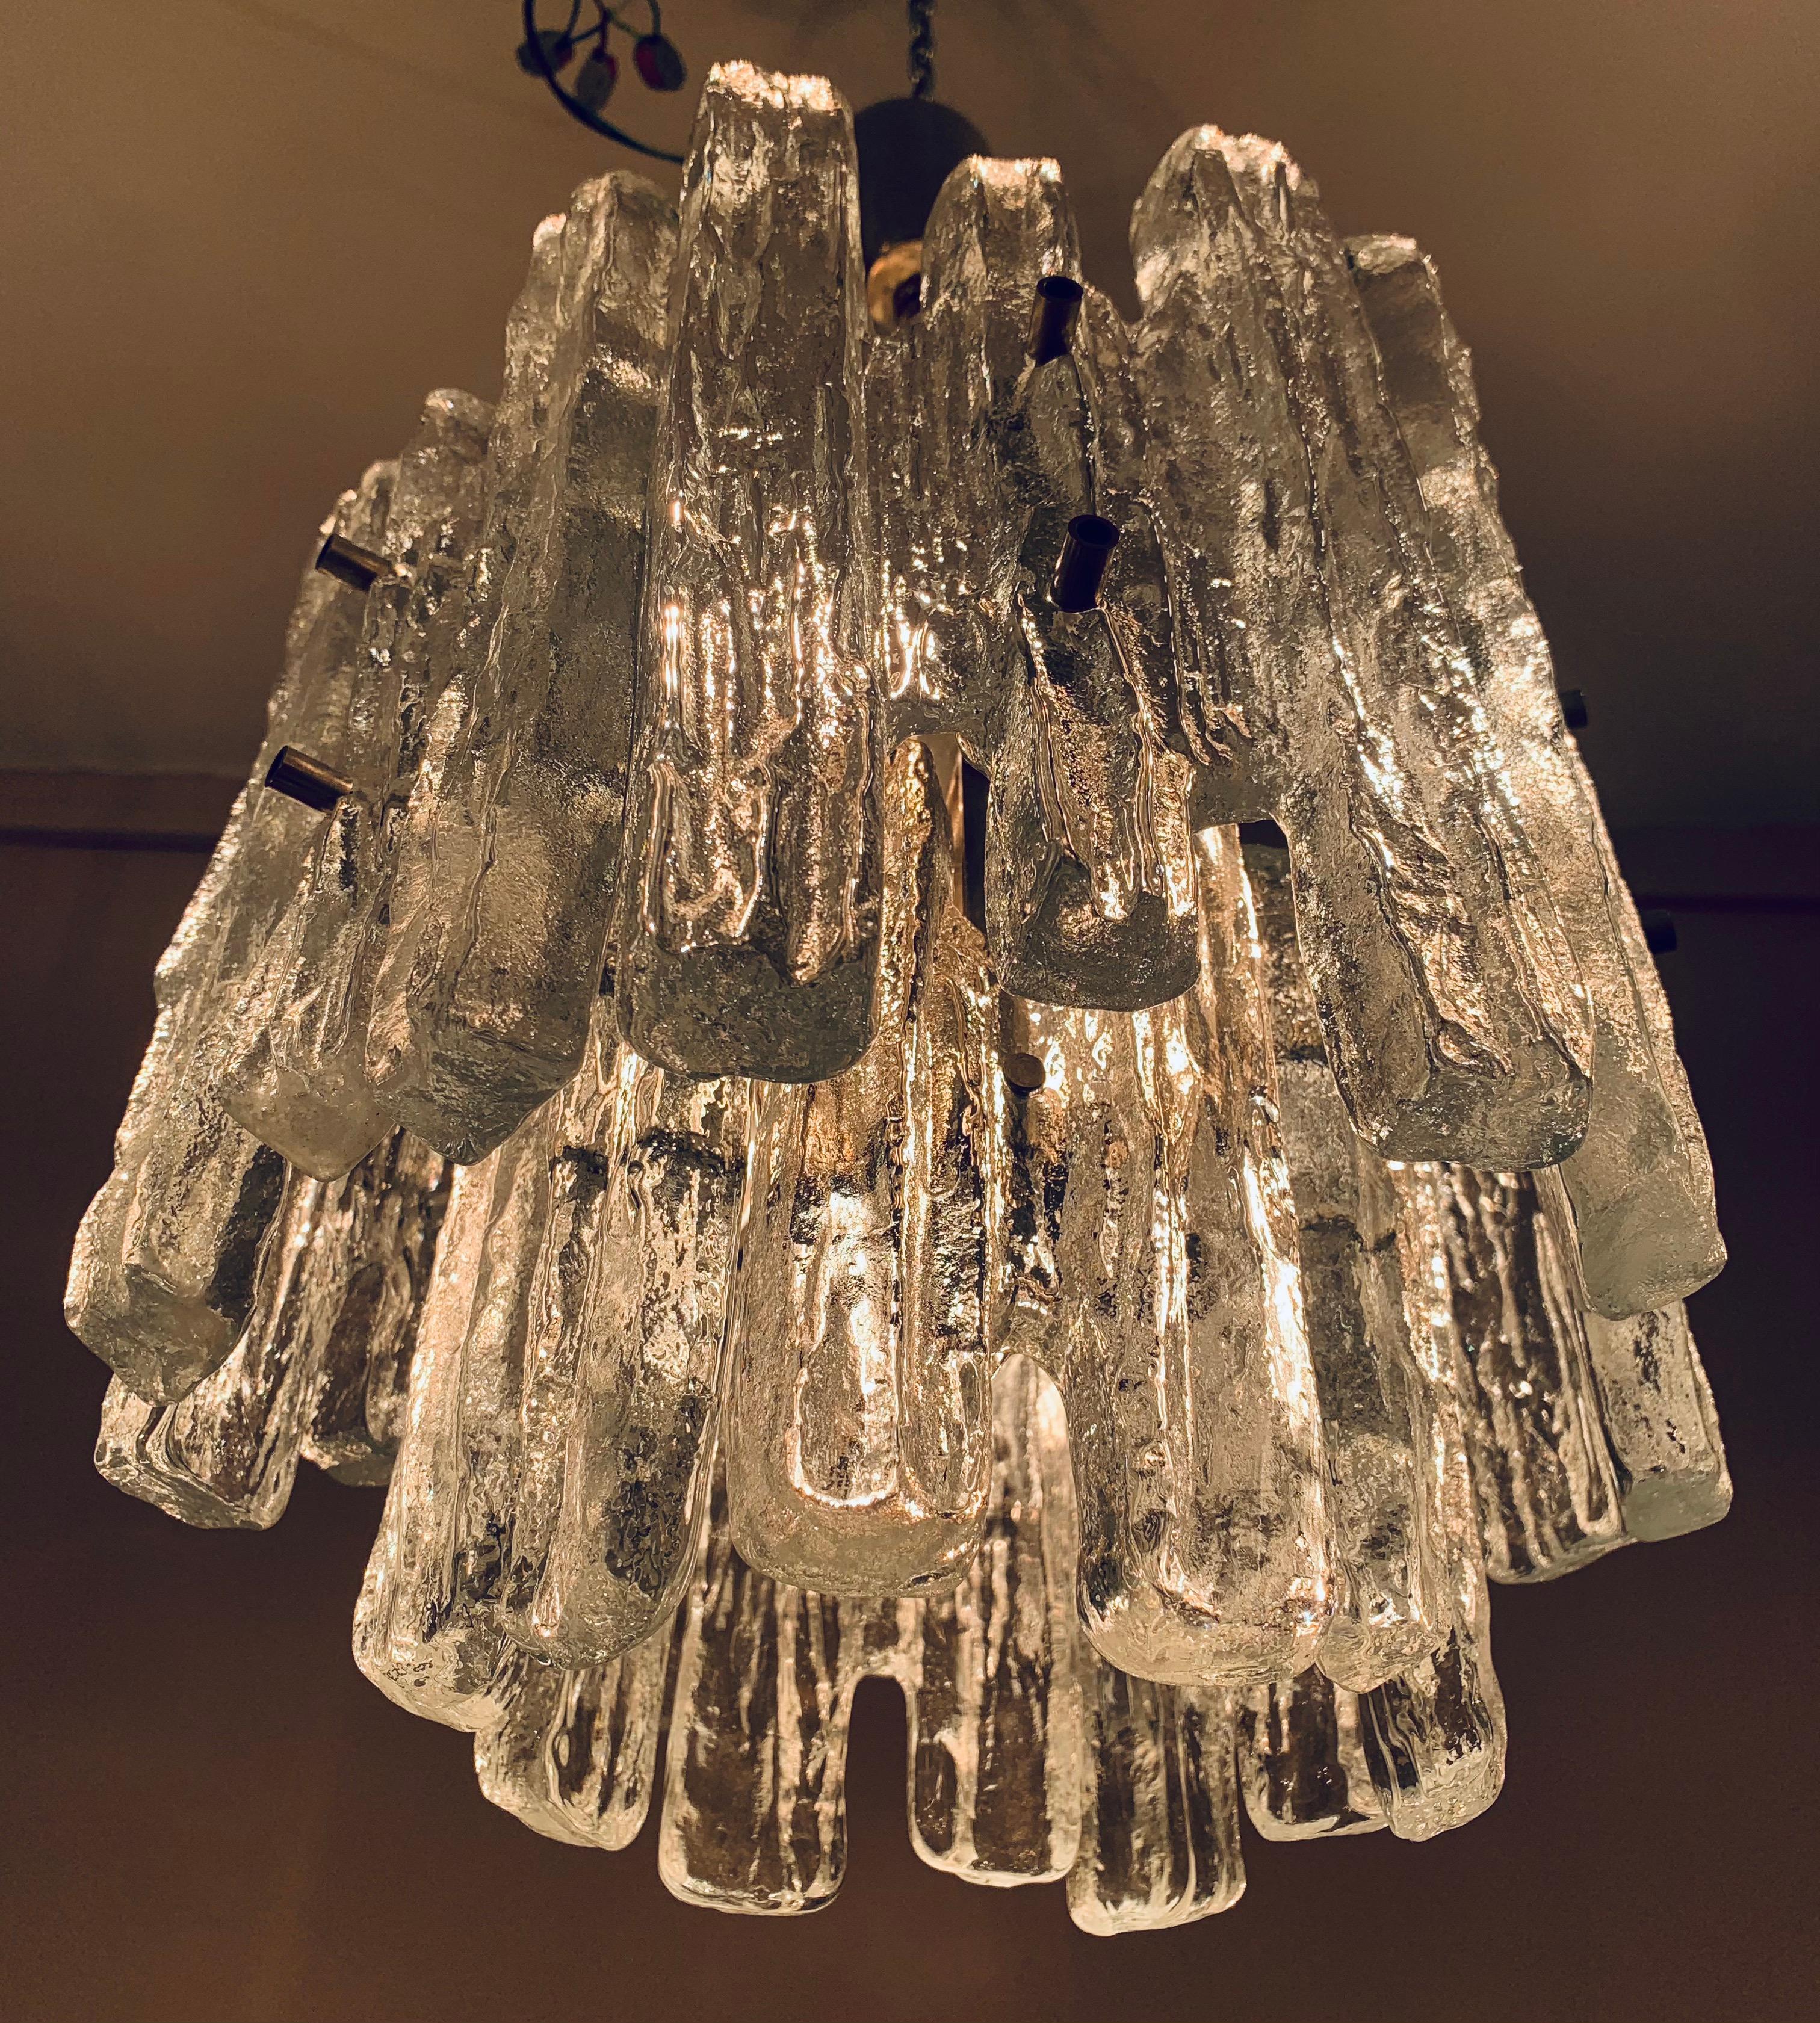 20th Century 1960s Austrian Kalmar Lighting Two-Tier Iced Glass Chandelier. JT Kalmar design